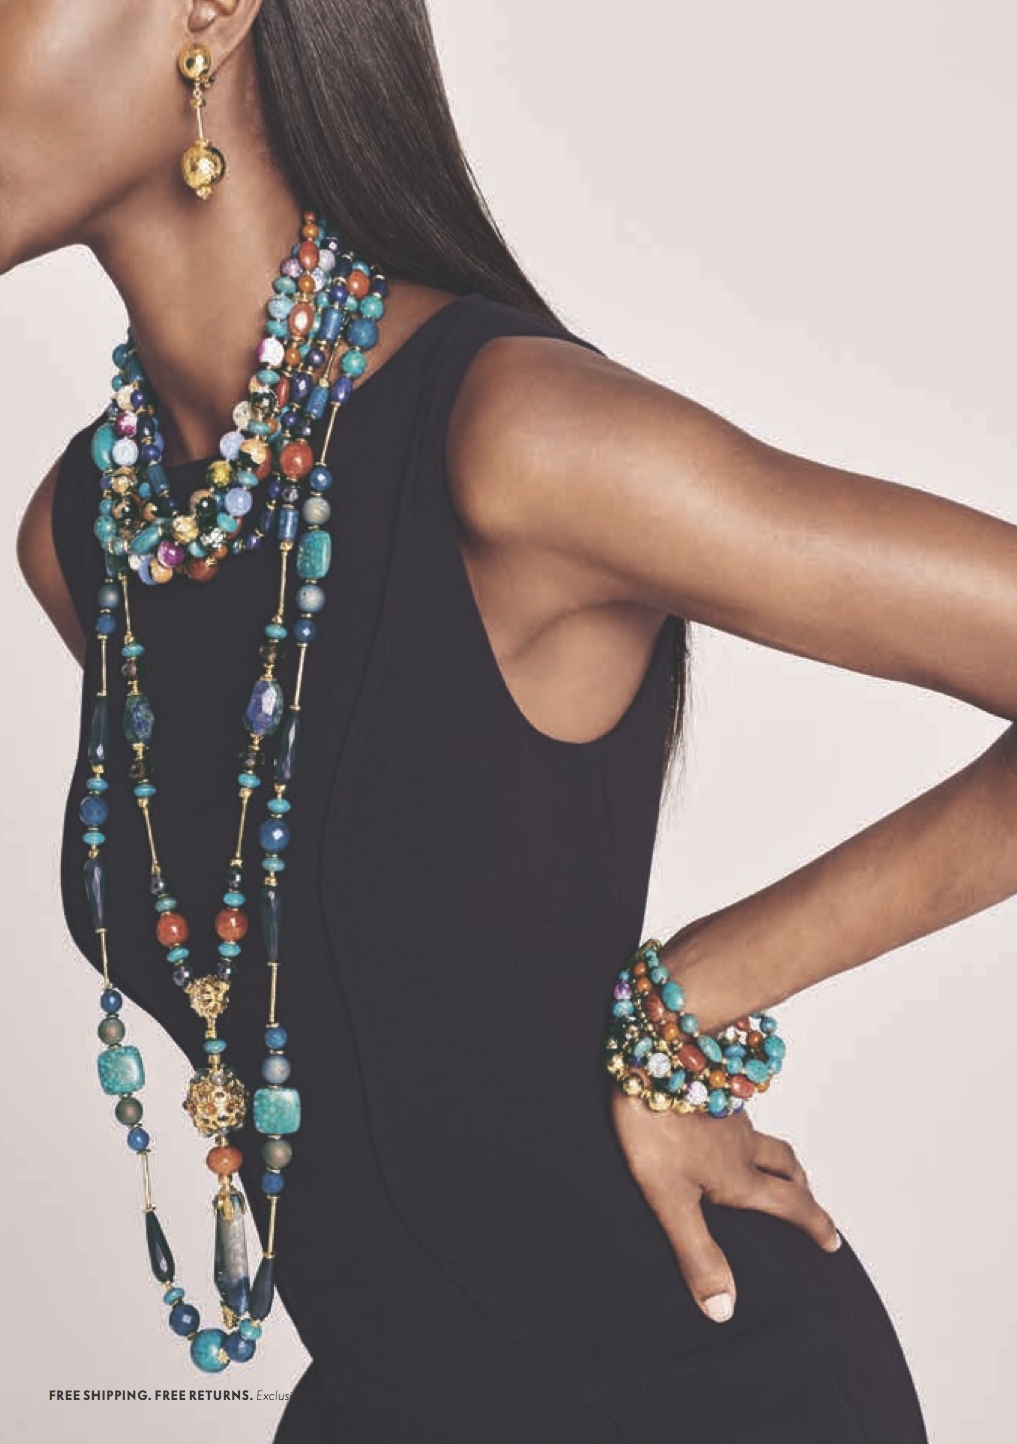 Neiman Marcus Holiday 2015 Jewelry Looks